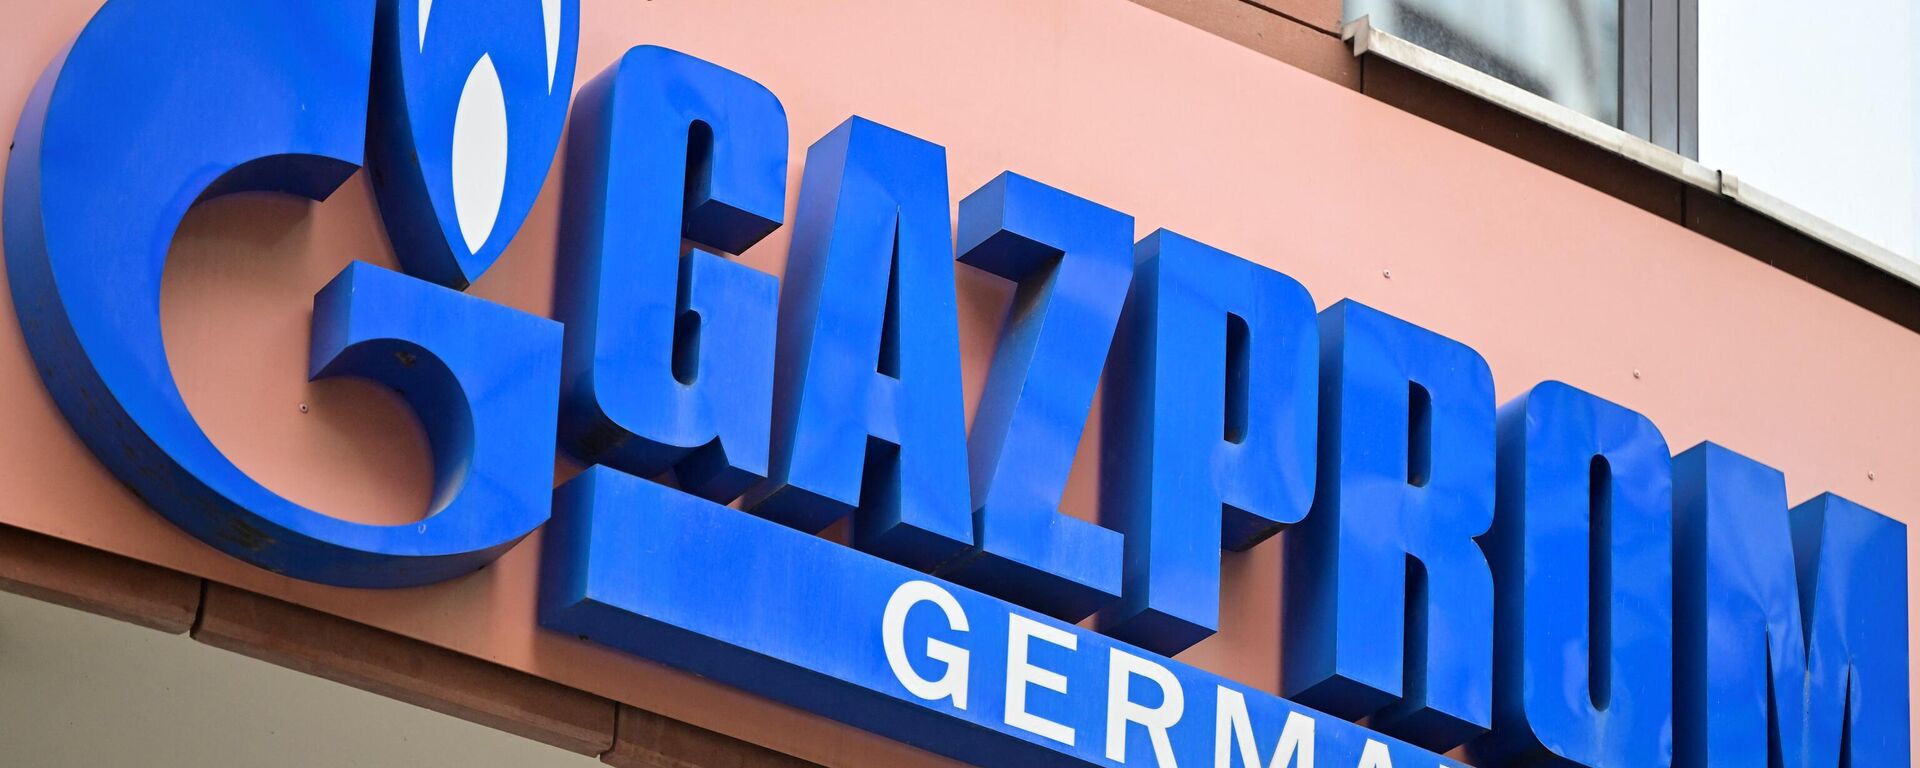 Sede da Gazprom Germania, filial da Gazprom, em Berlim, Alemanha, 5 de abril de 2022 - Sputnik Brasil, 1920, 15.06.2022